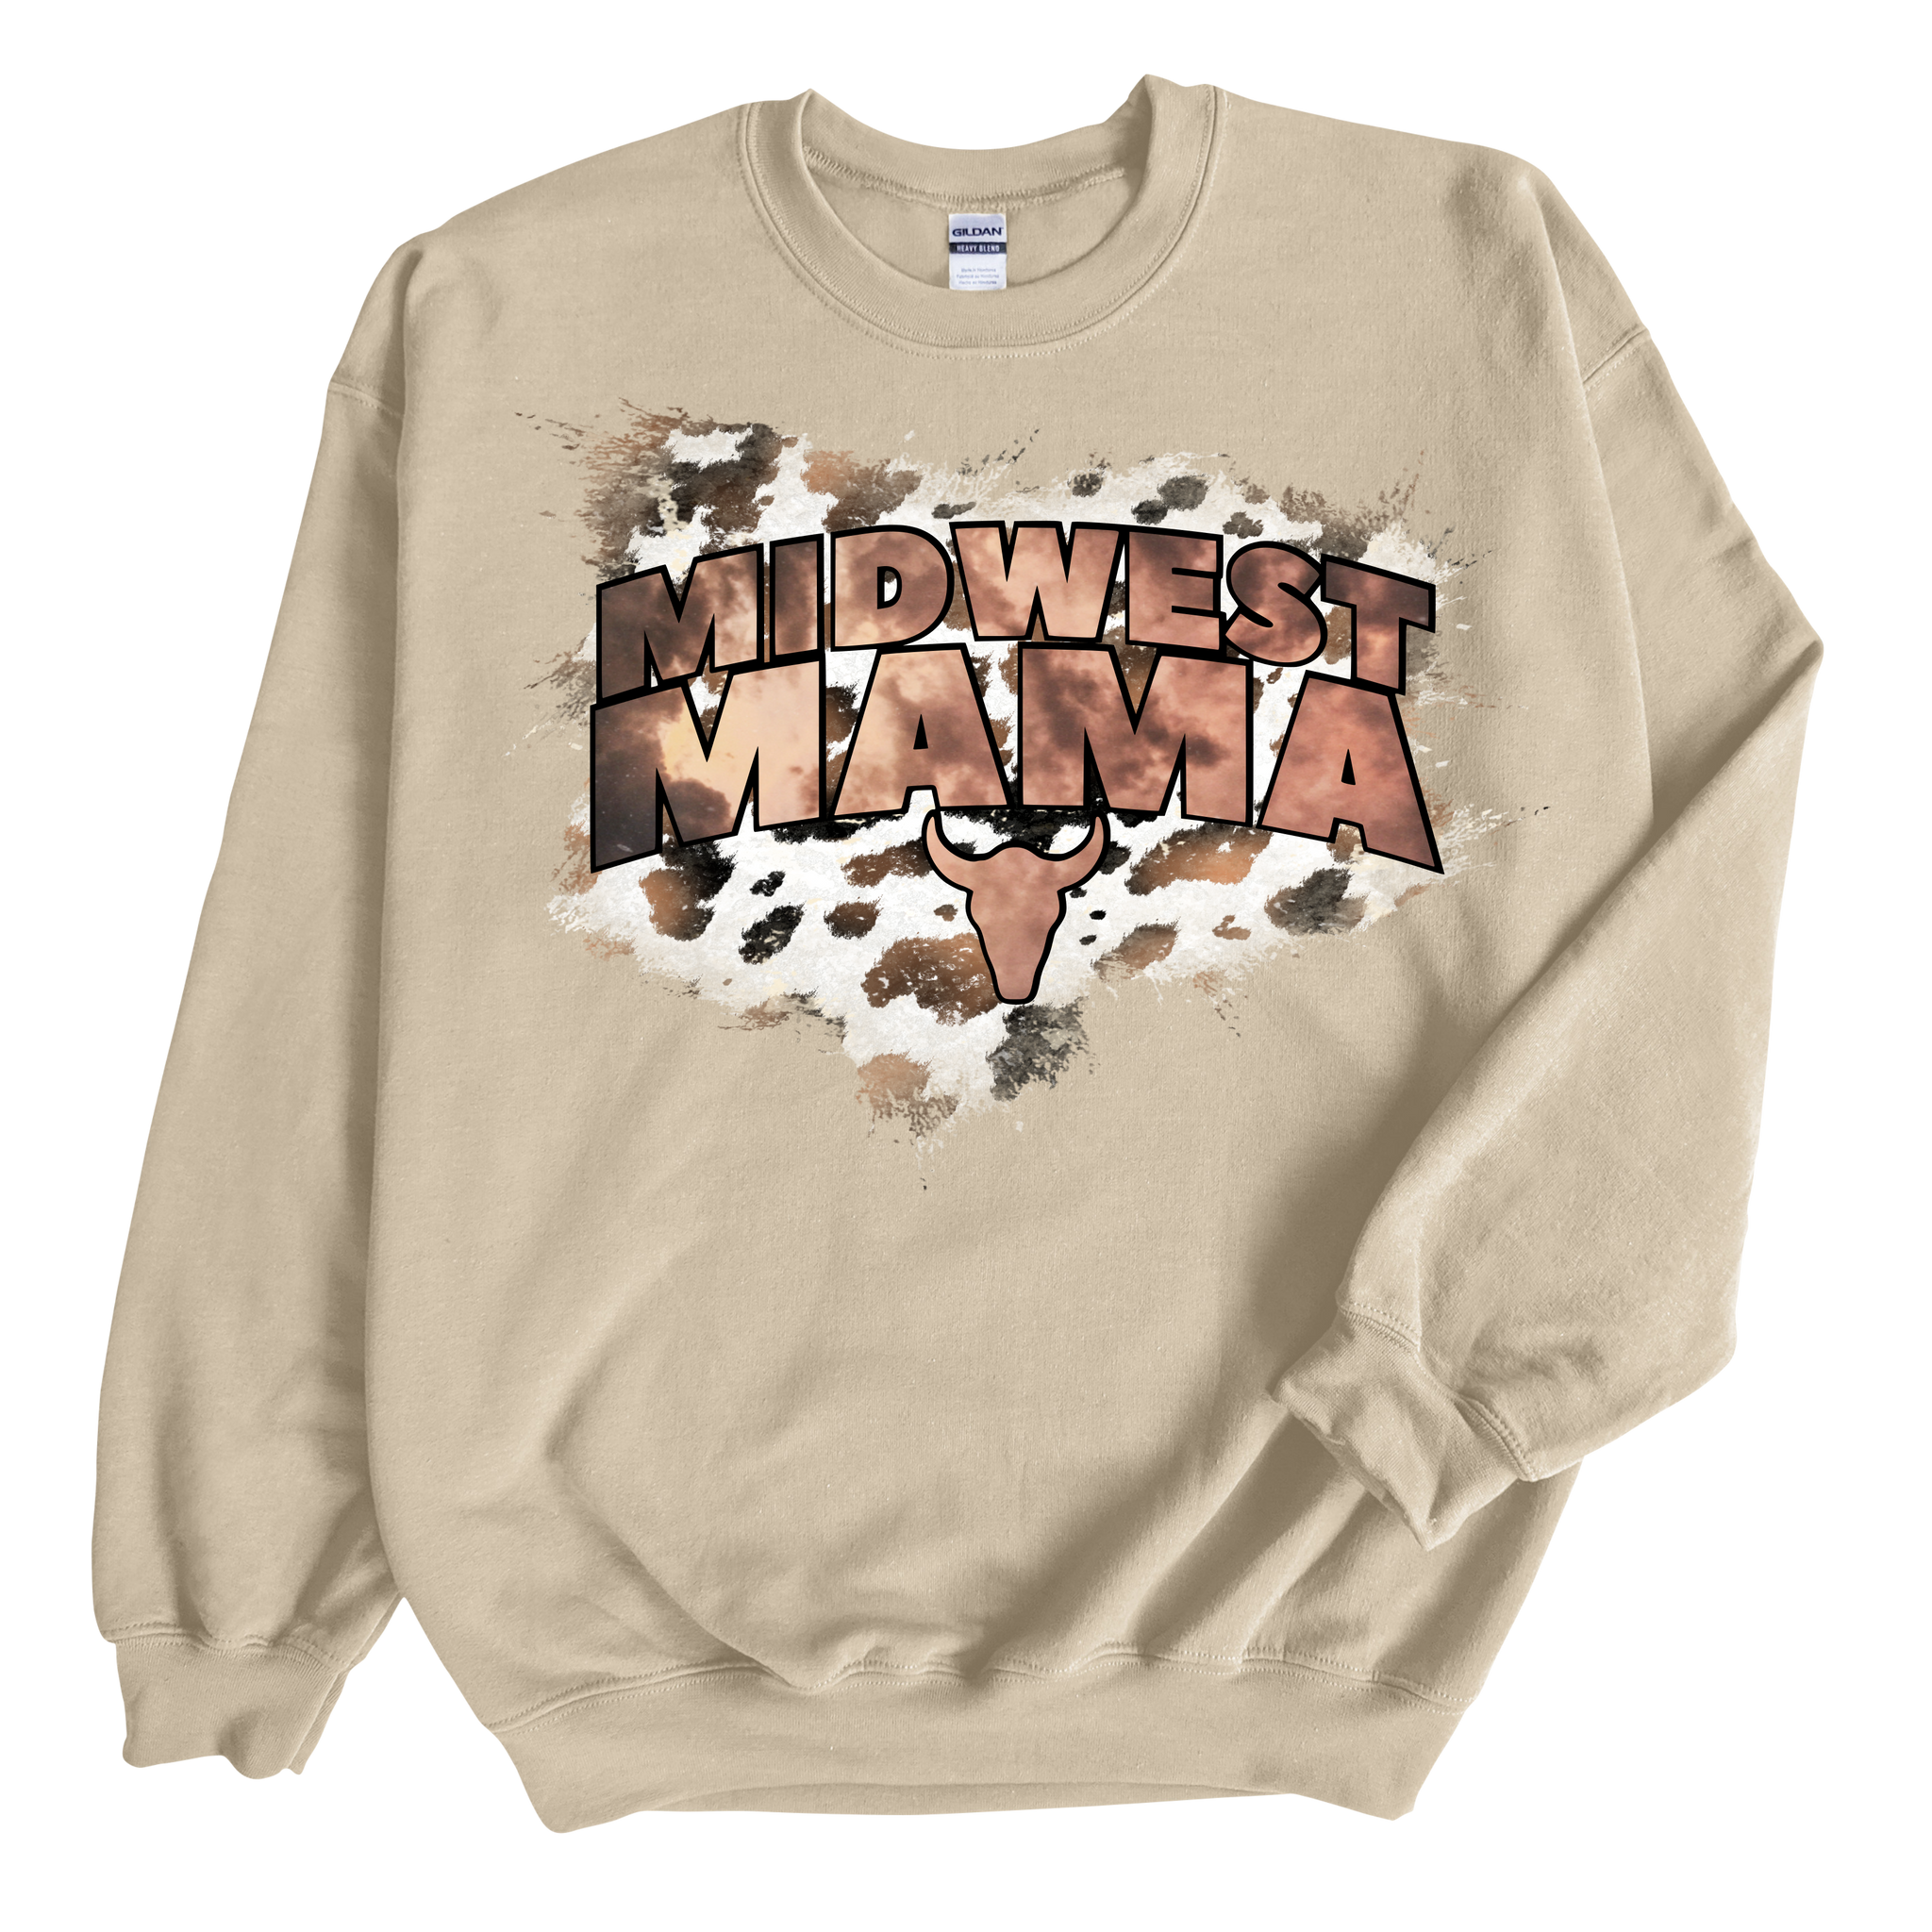 Midwest Mama Crew Sweatshirt.